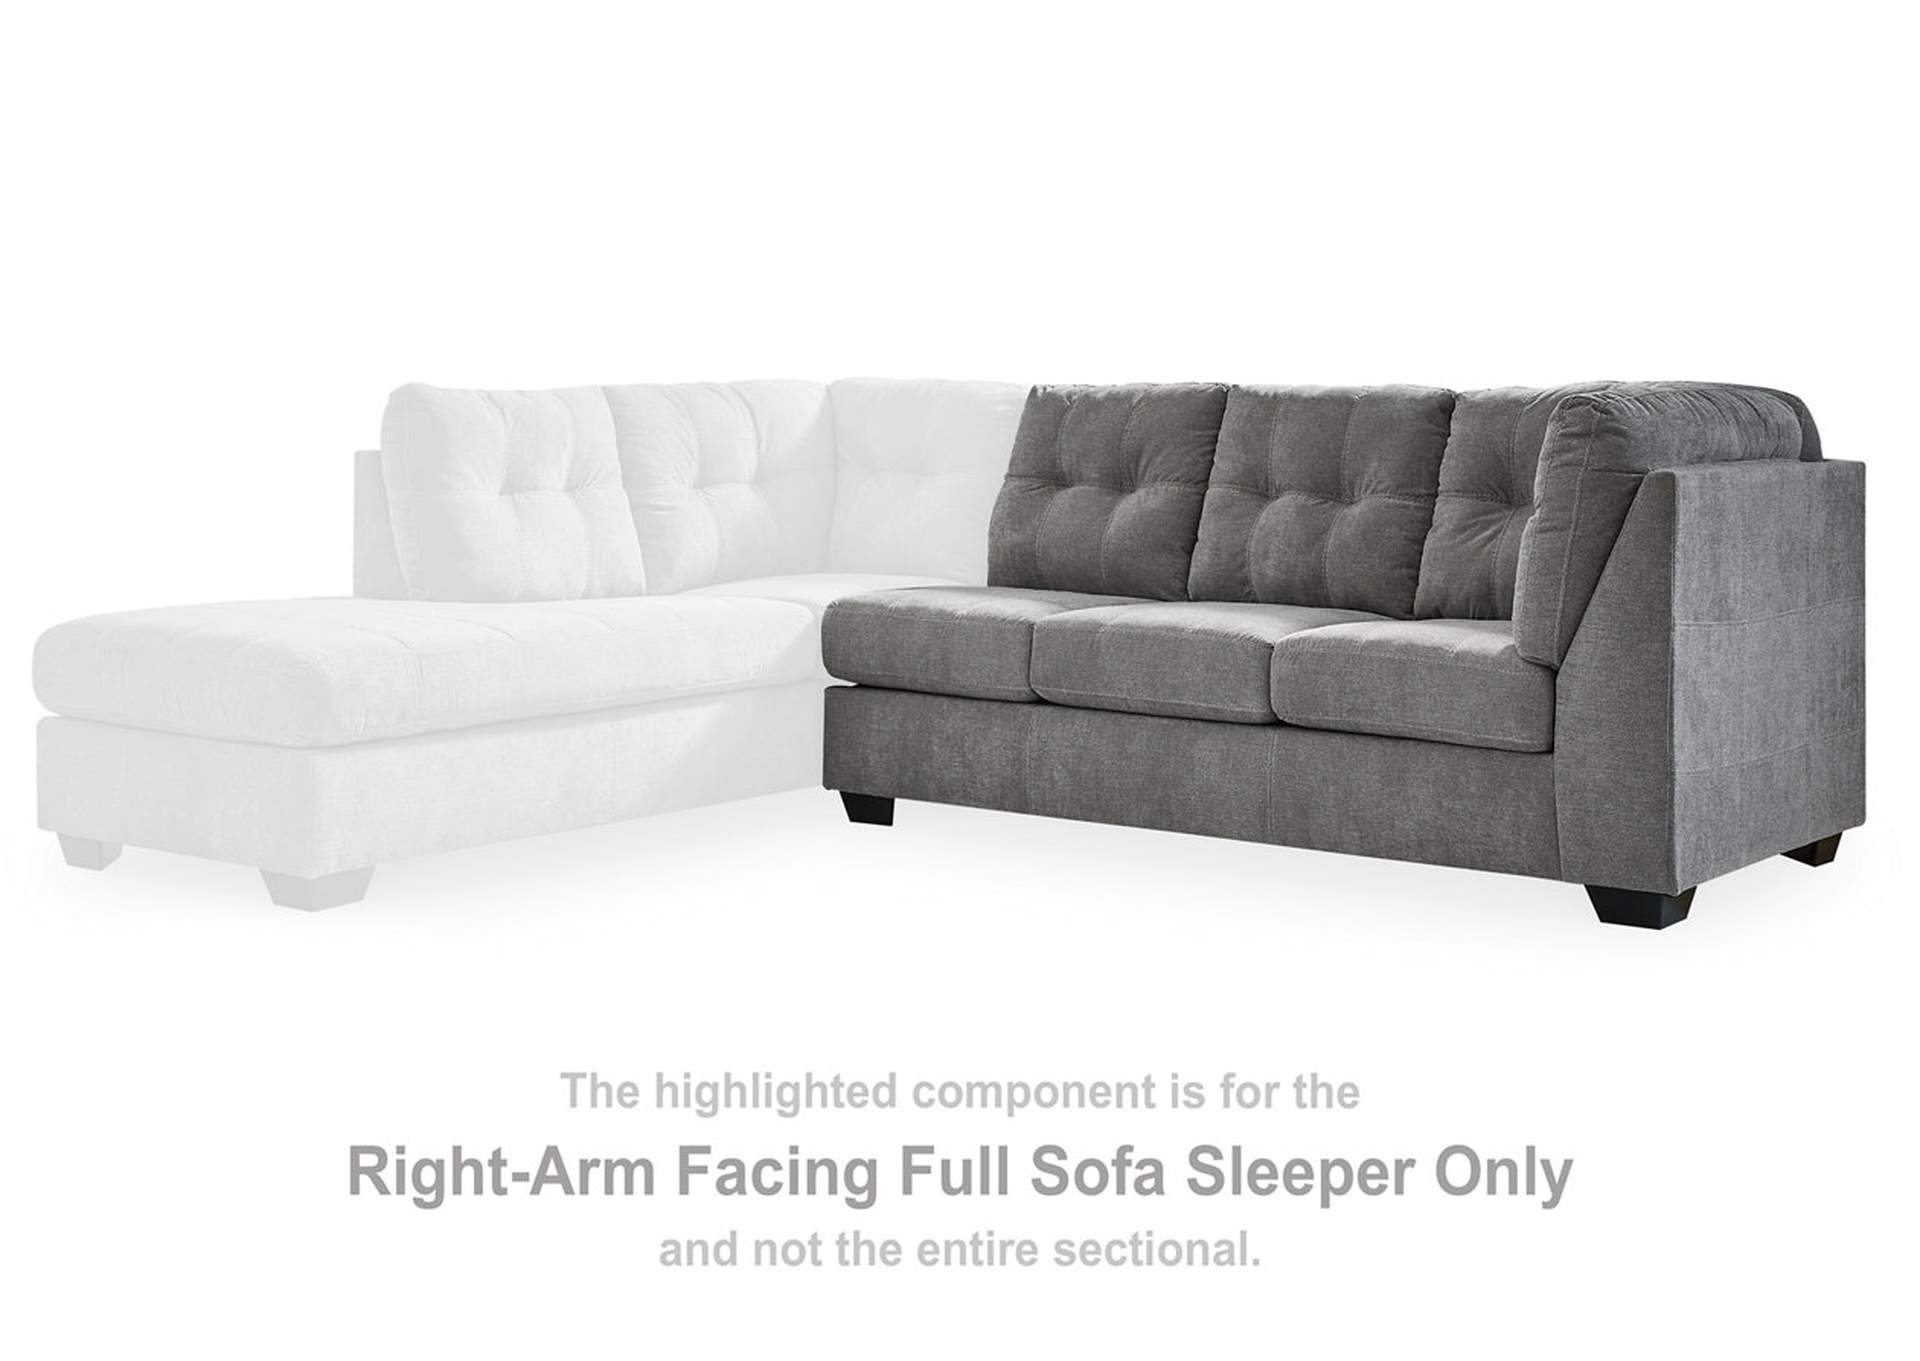 Marleton Right-Arm Facing Full Sofa Sleeper,Signature Design By Ashley